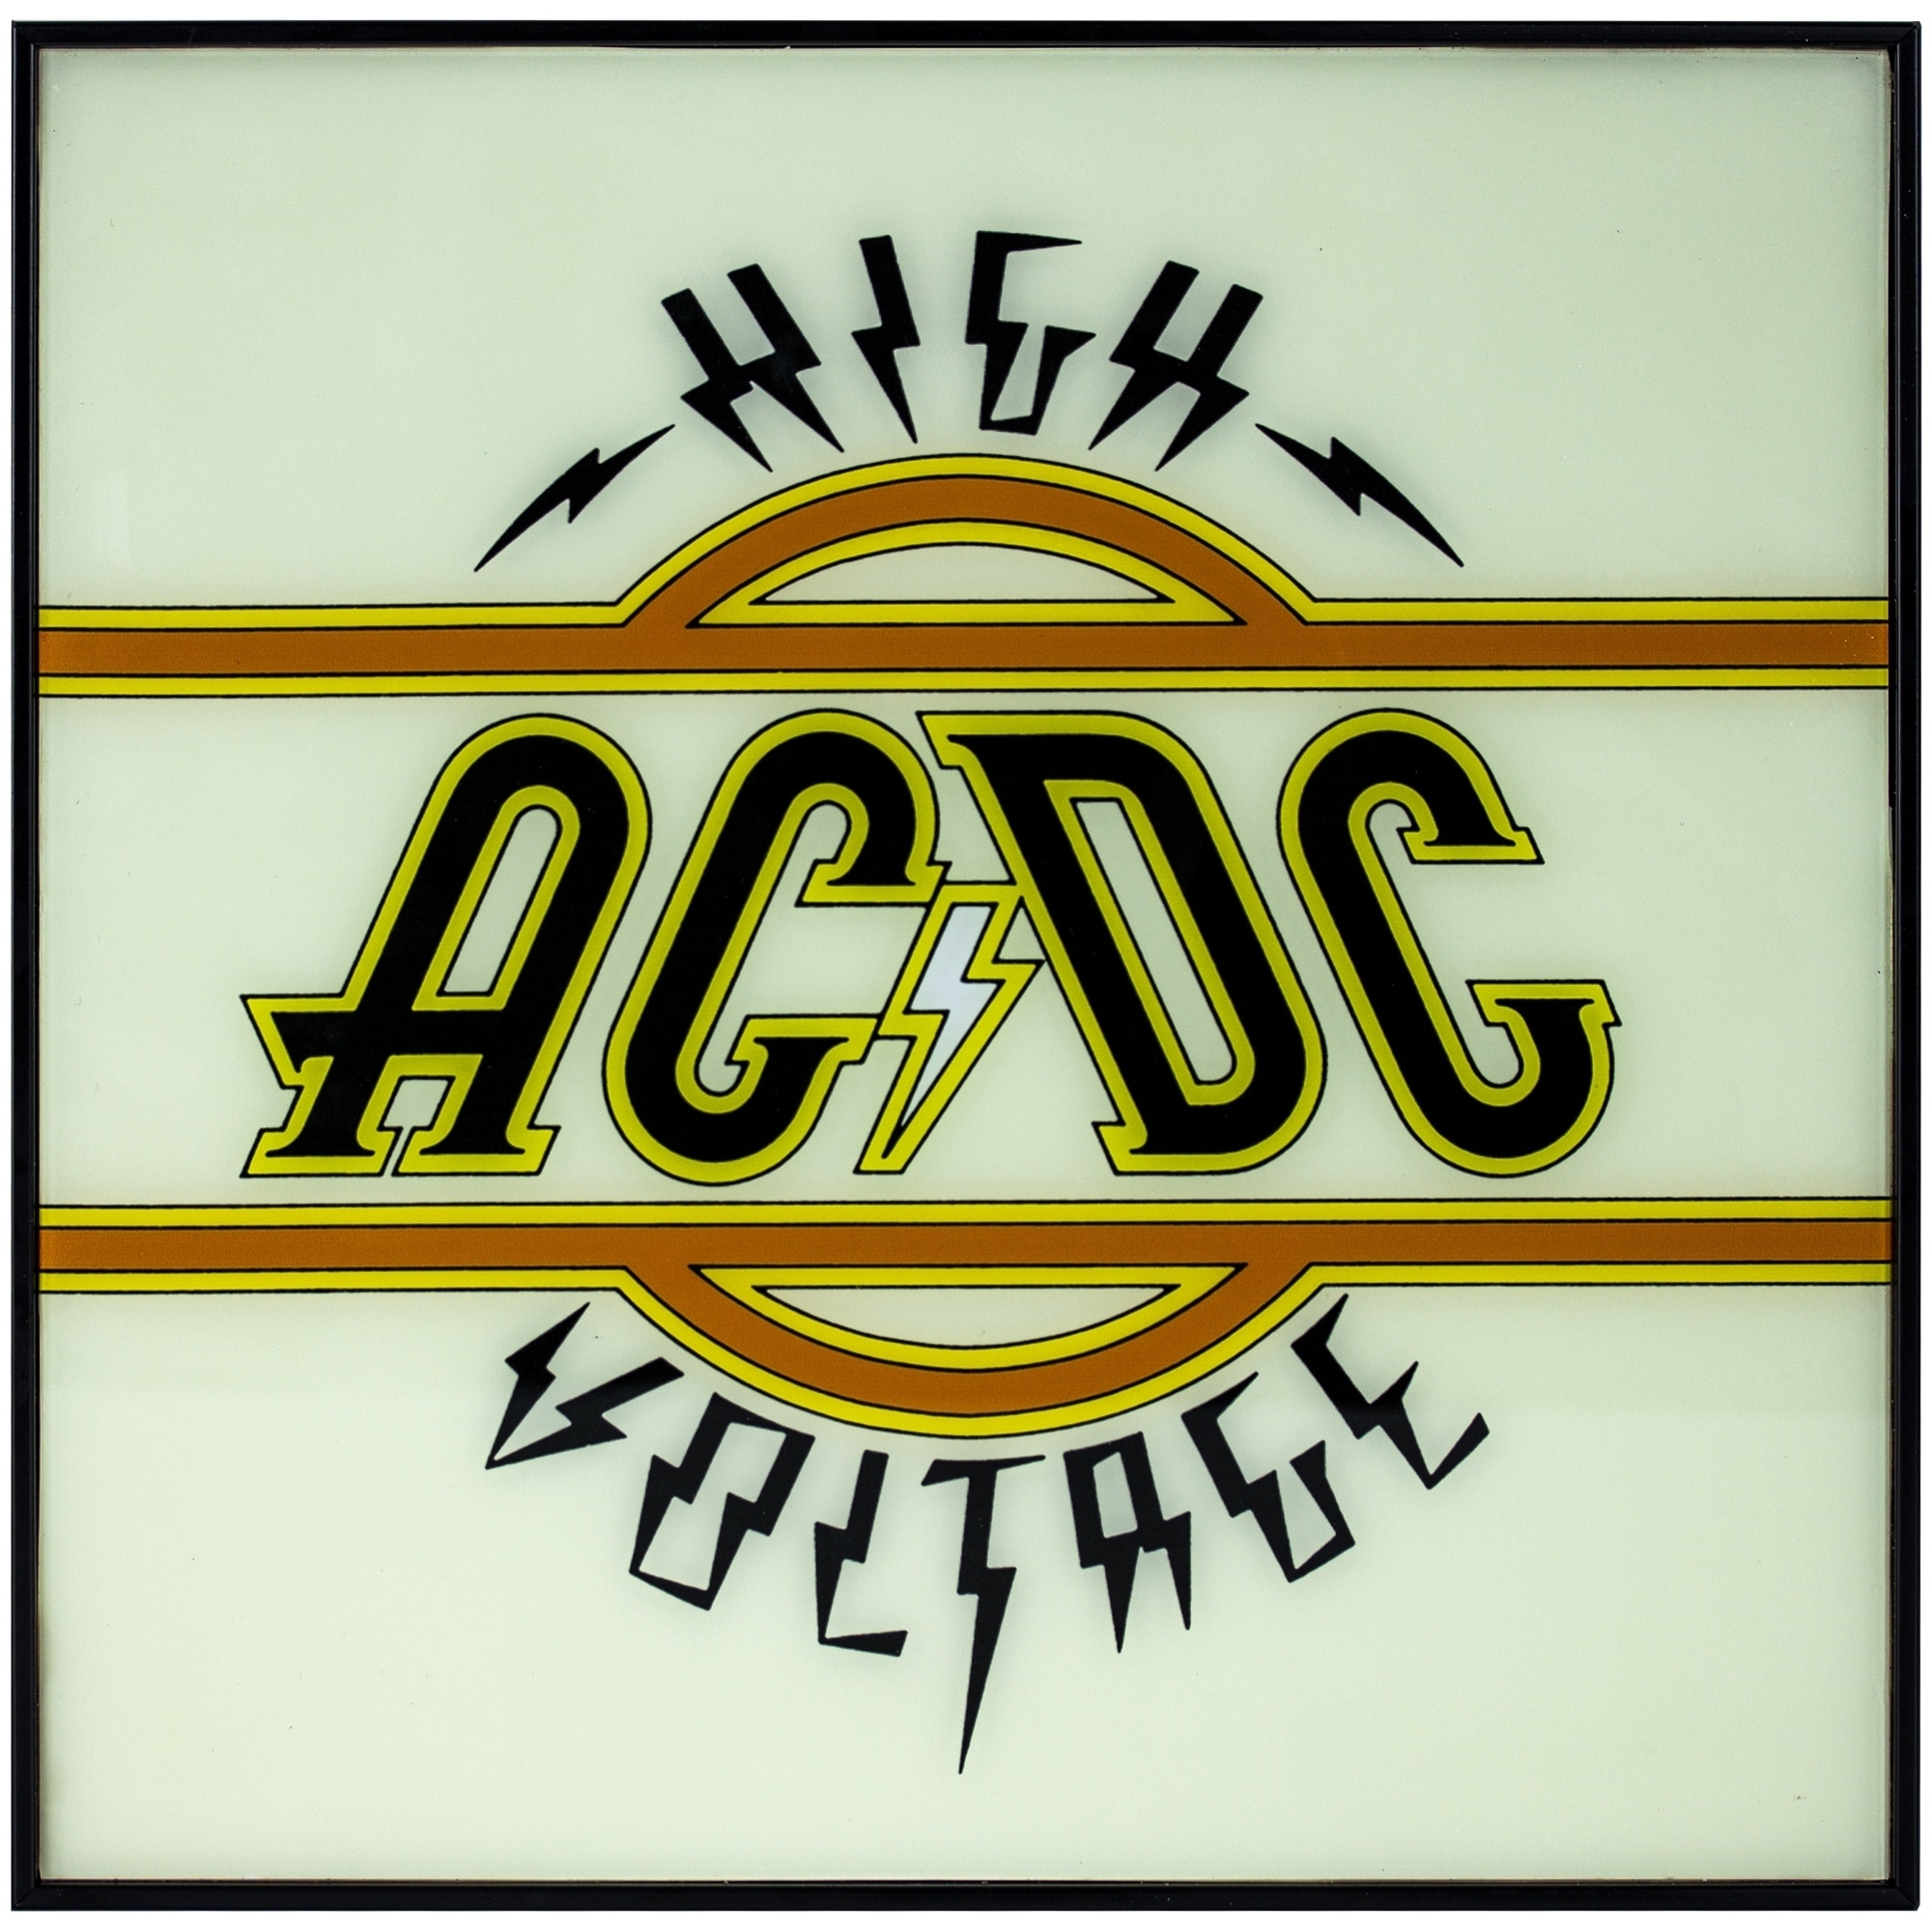 American Art Decor AC/DC "High Voltage" Framed Album Cover Wall Art - 17522172